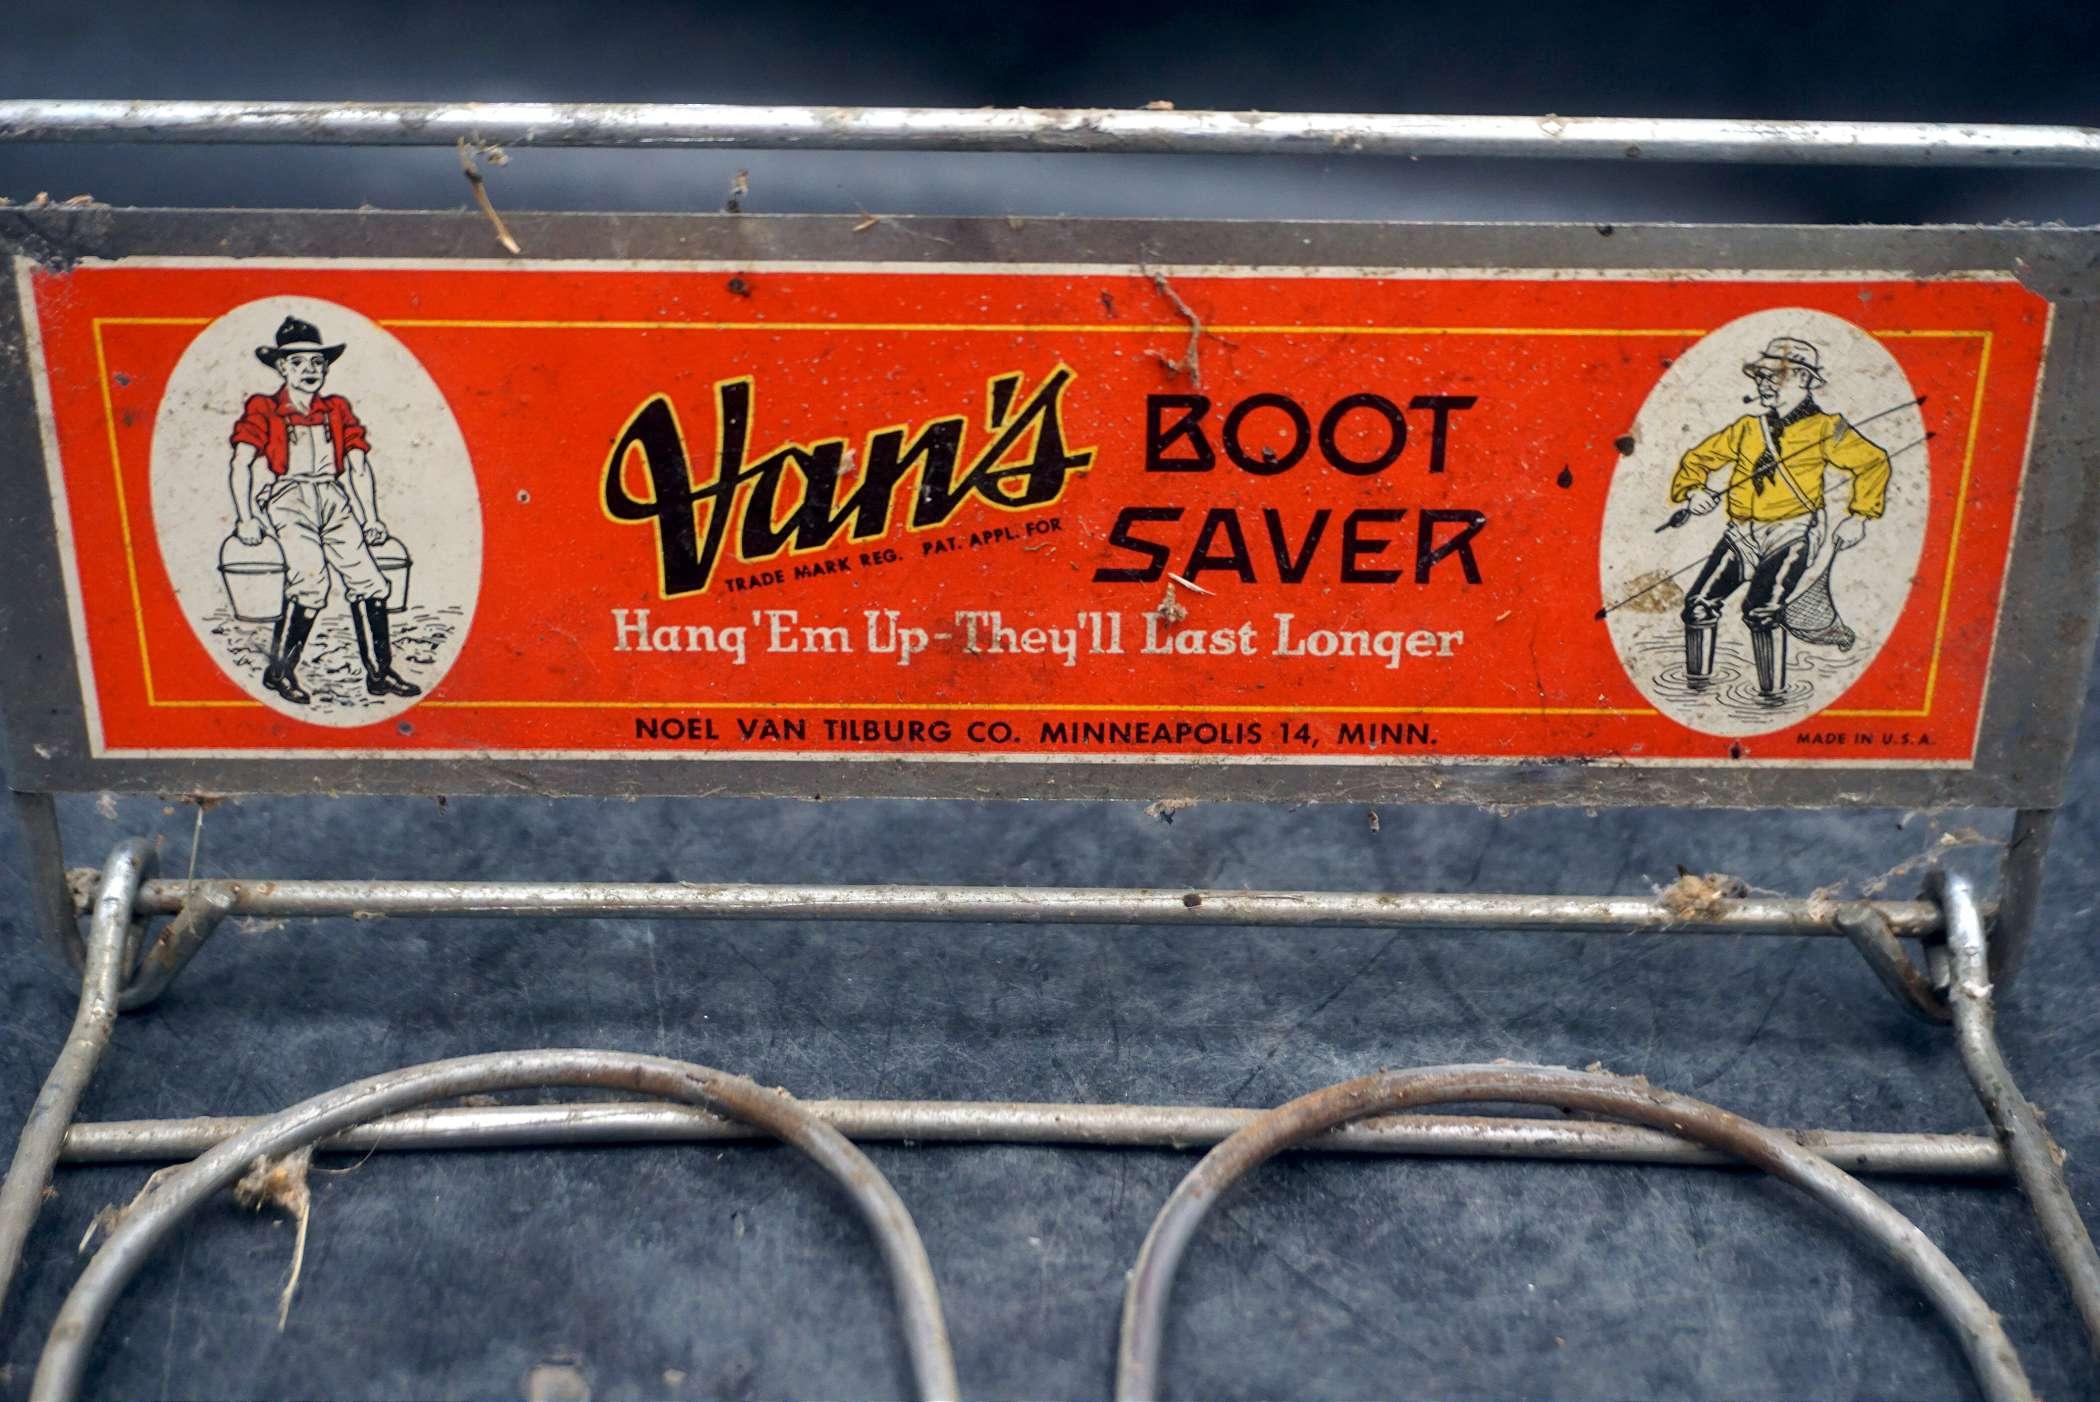 Vans Boot Saver - Hang 'Em Up. They'Ll Last Longer Boot Hanger